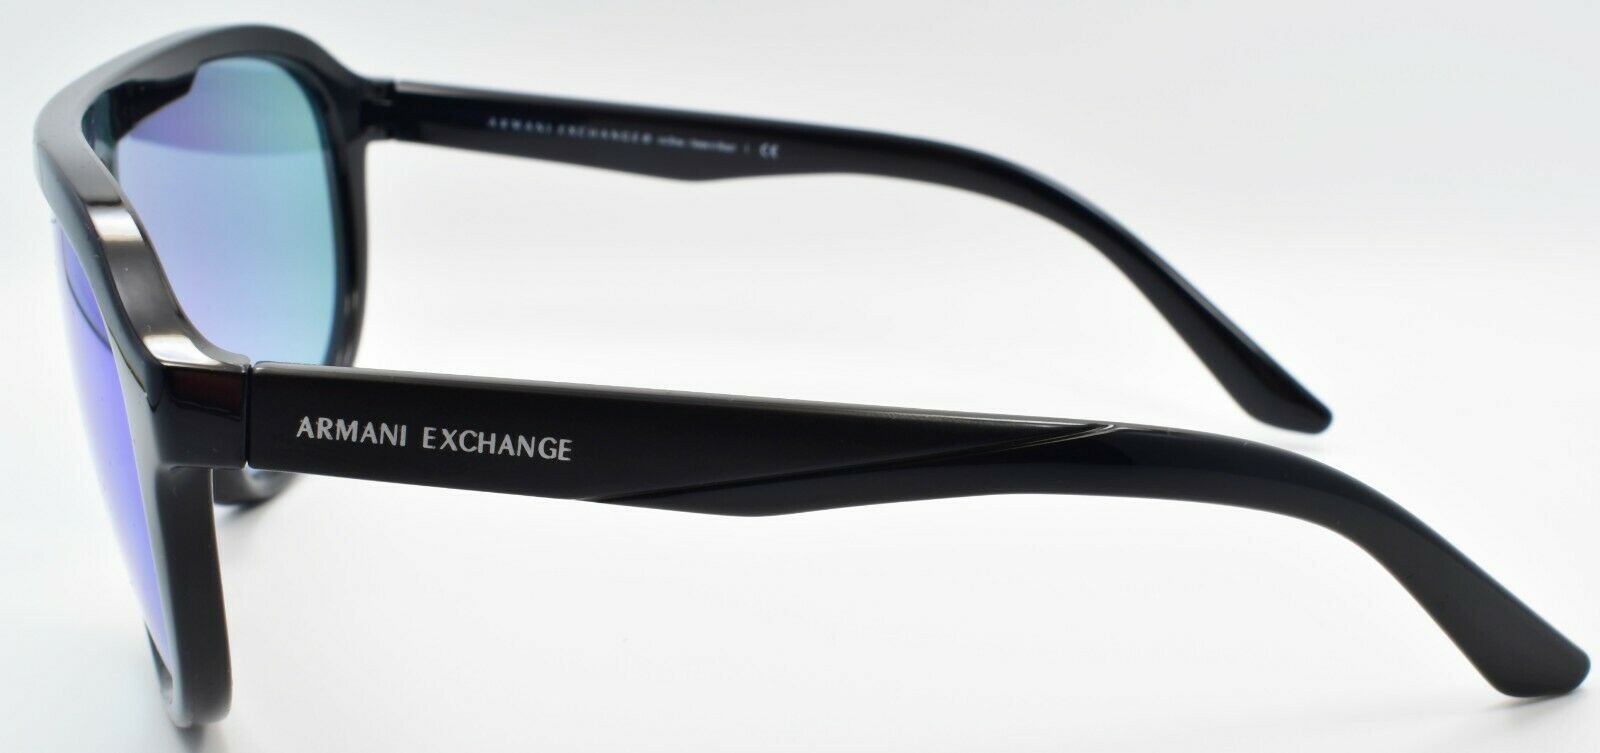 3-Armani Exchange AX4099S 815831 Shield Sunglasses Black / Blue Mirror-7895653196643-IKSpecs